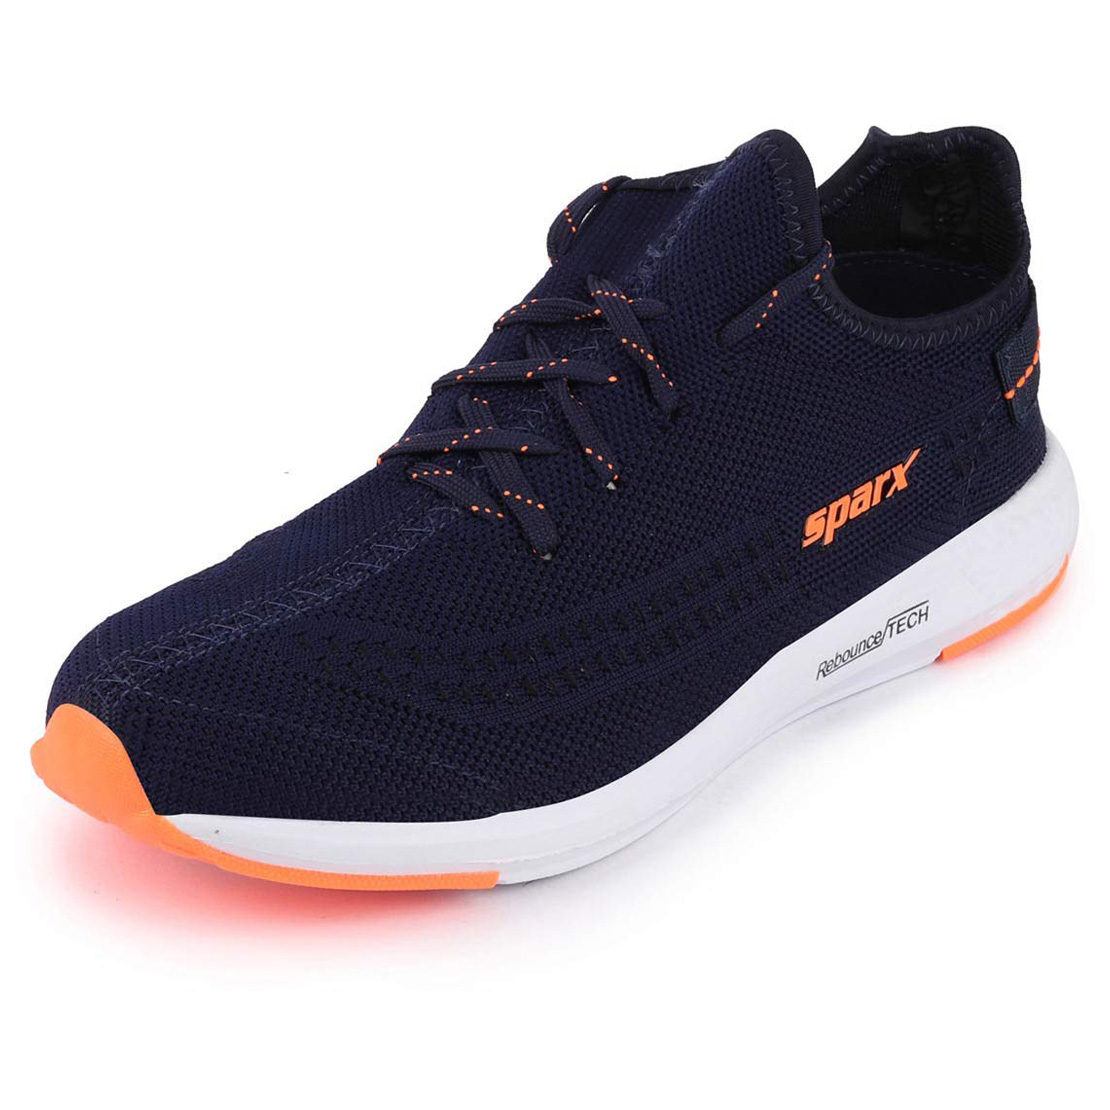 Buy Sparx Men's Navy Blue/Neon Orange Lace Up Running Shoes Online ...